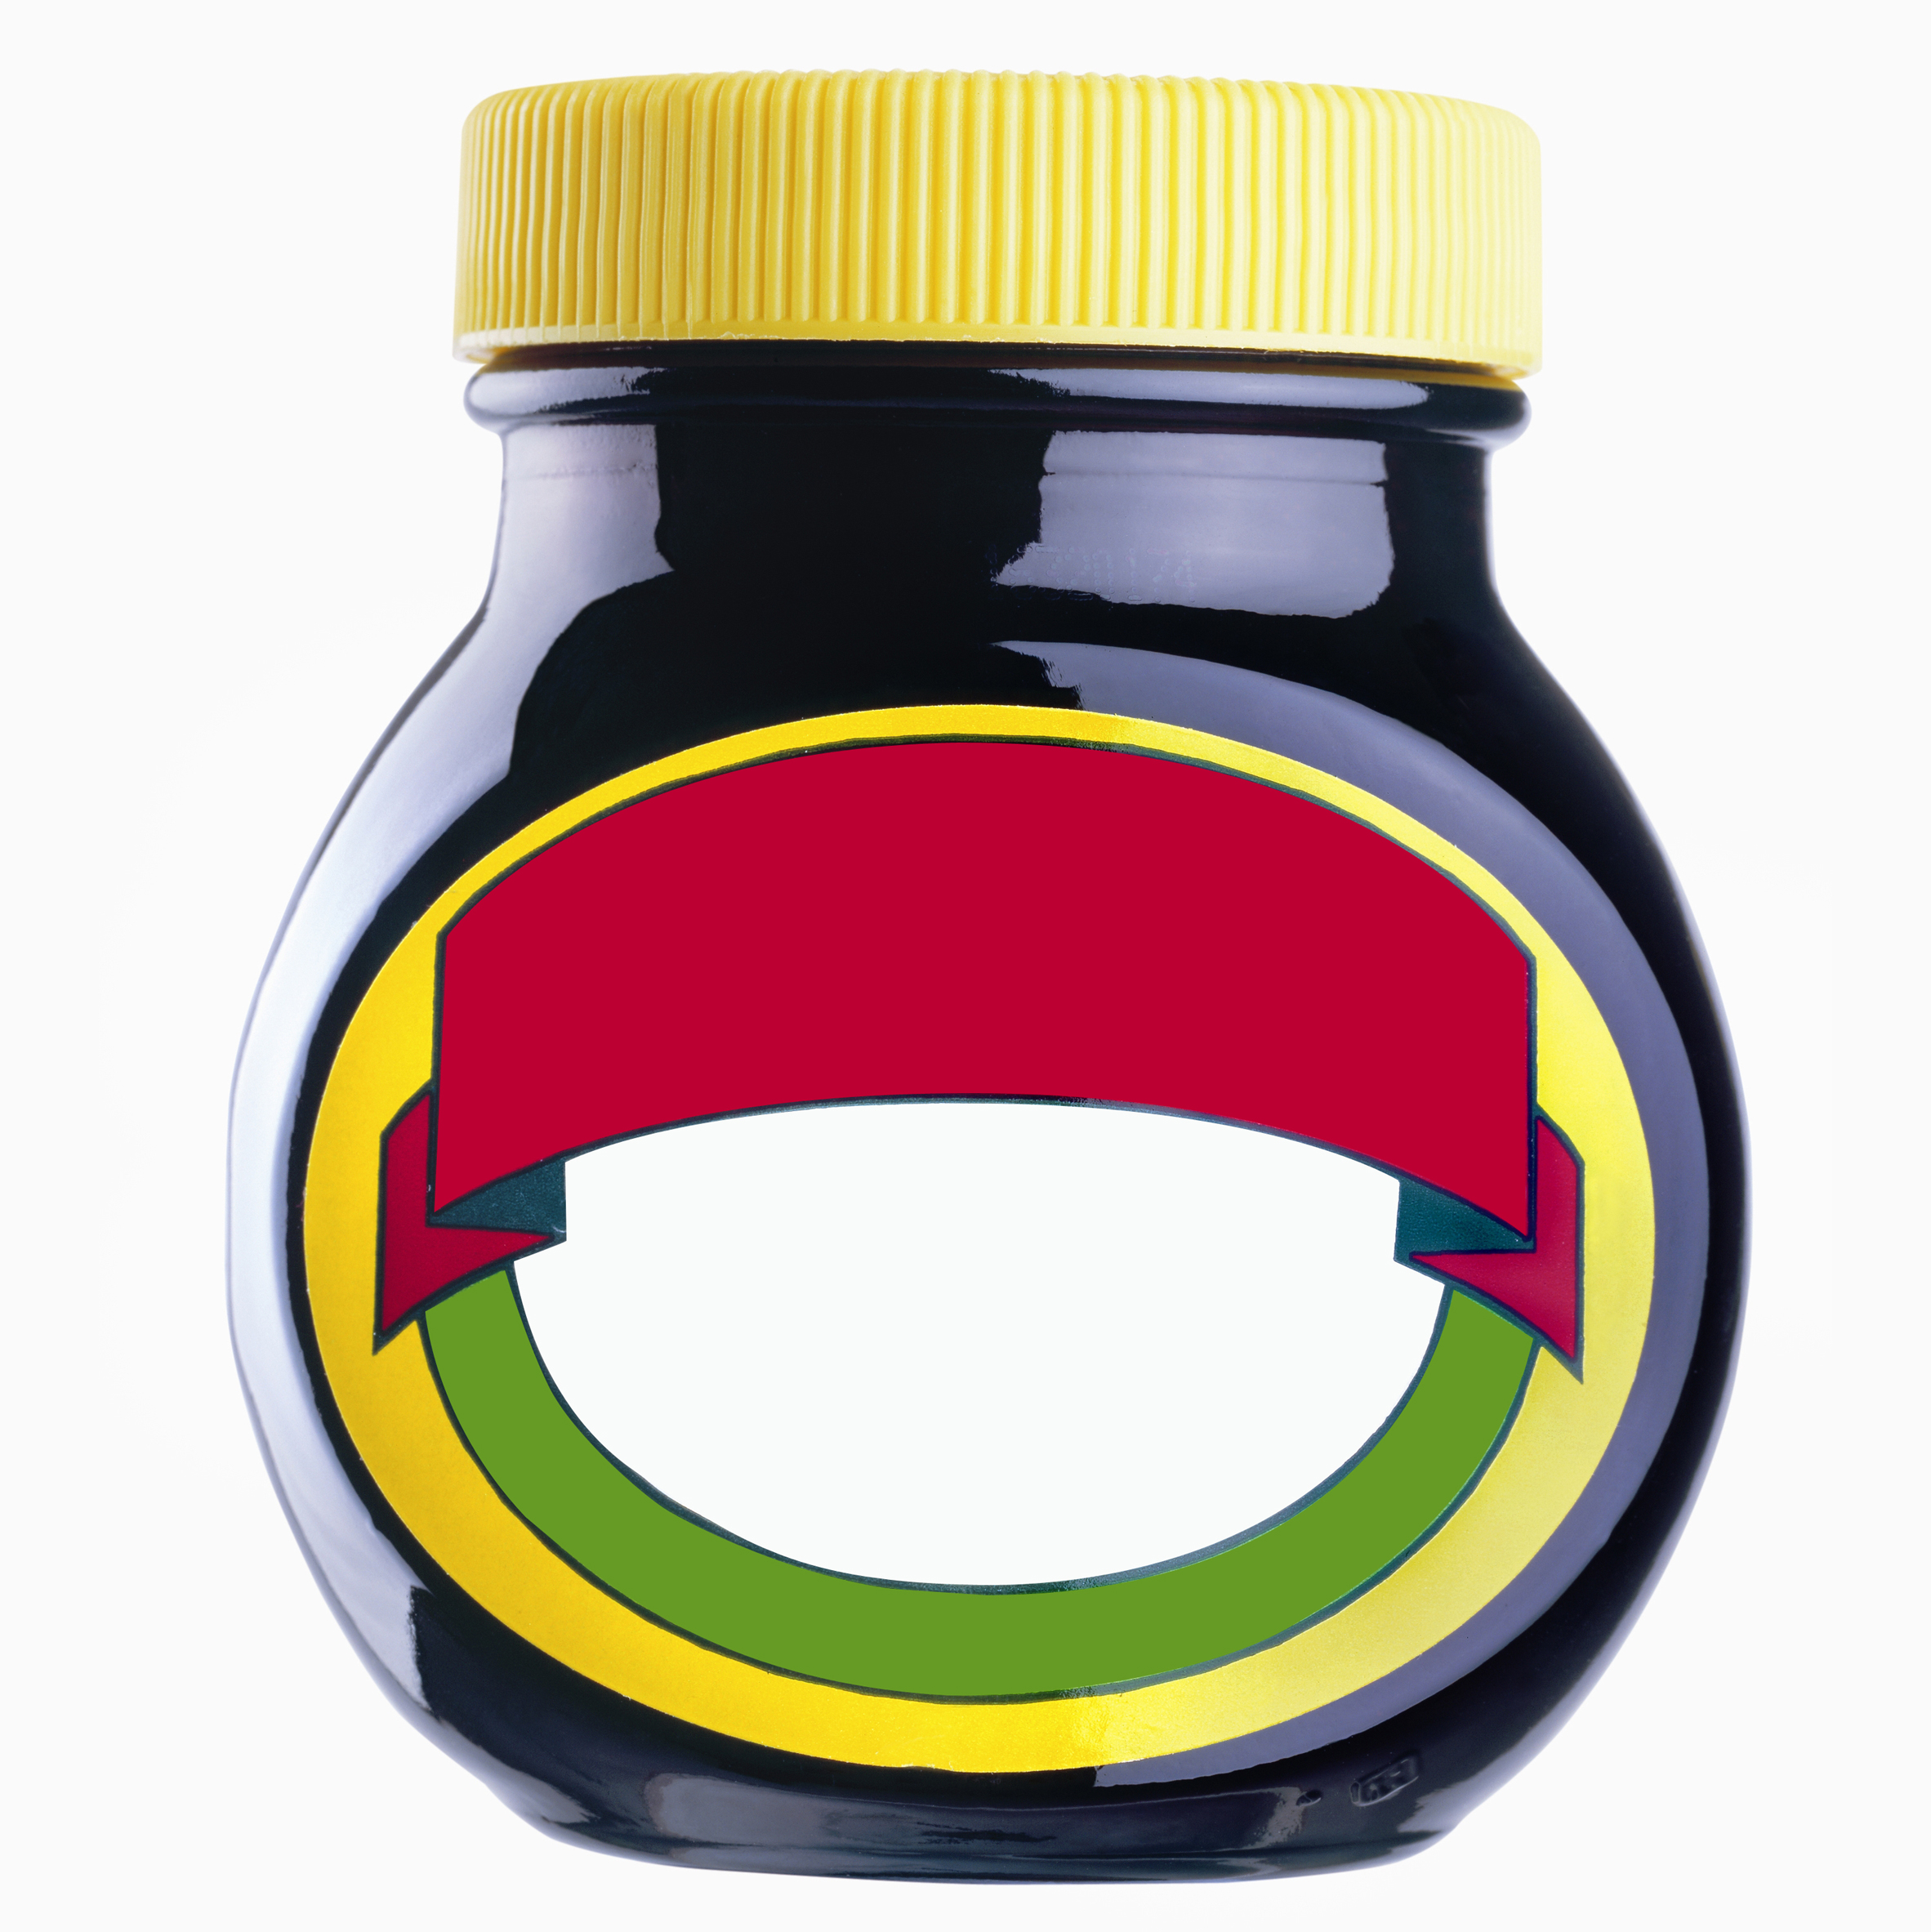 selfridges-no-noise-debranded-marmite-jar_minimalist-packaging-roundup_dezeen-2364-sq